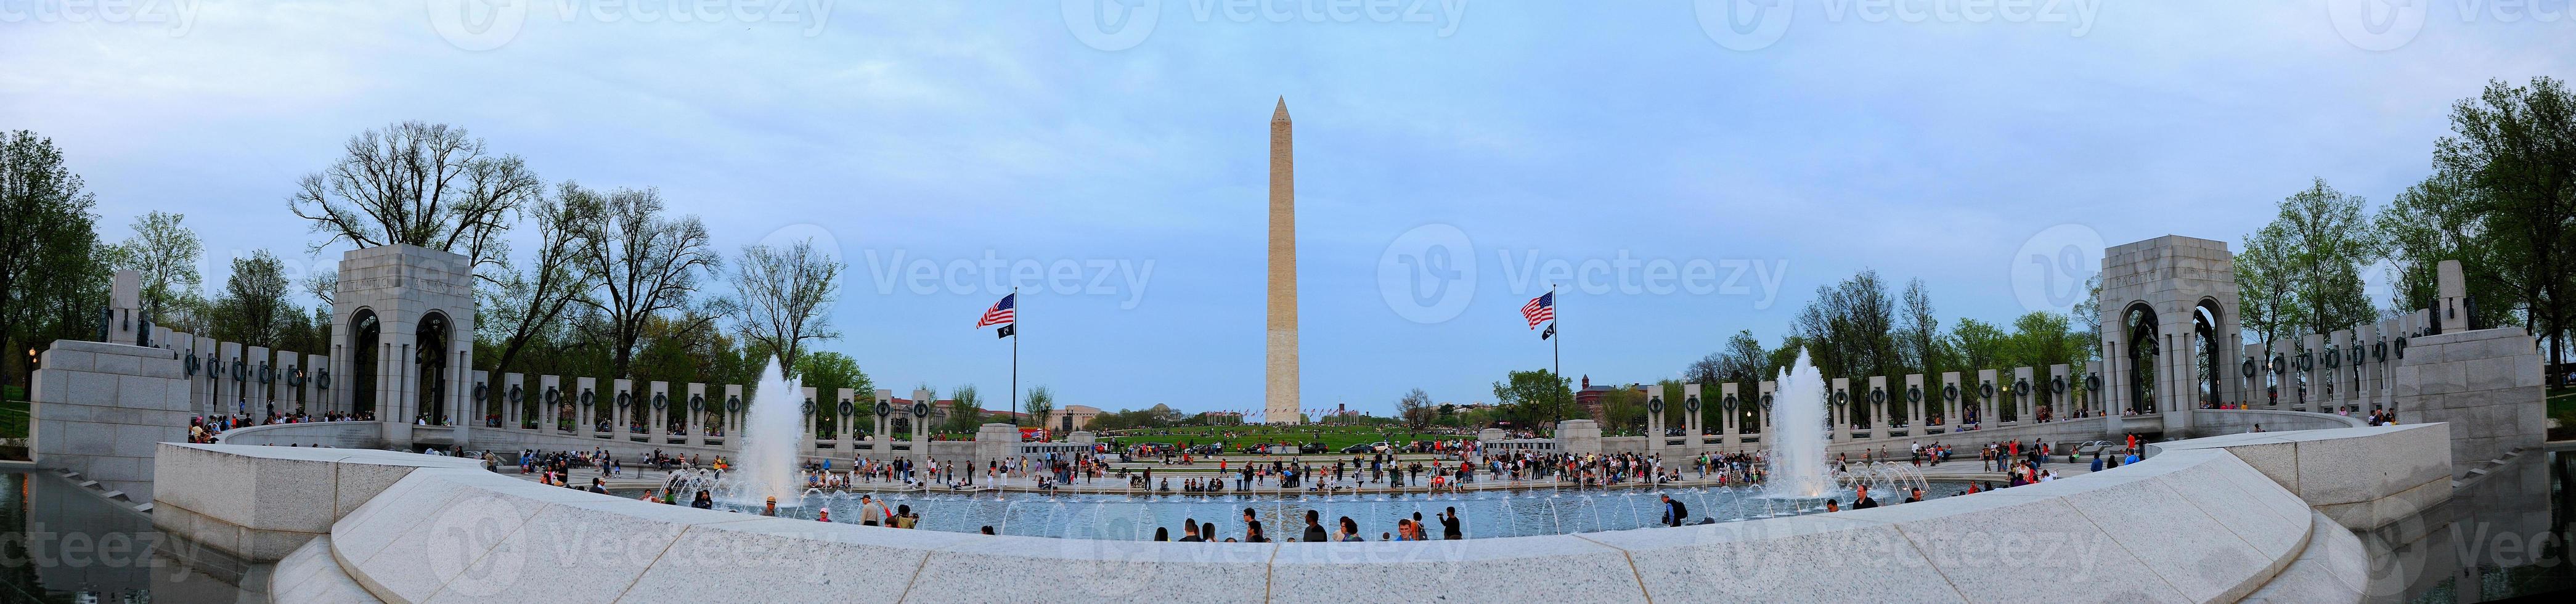 panorama del monumento di Washington, Washington DC. foto